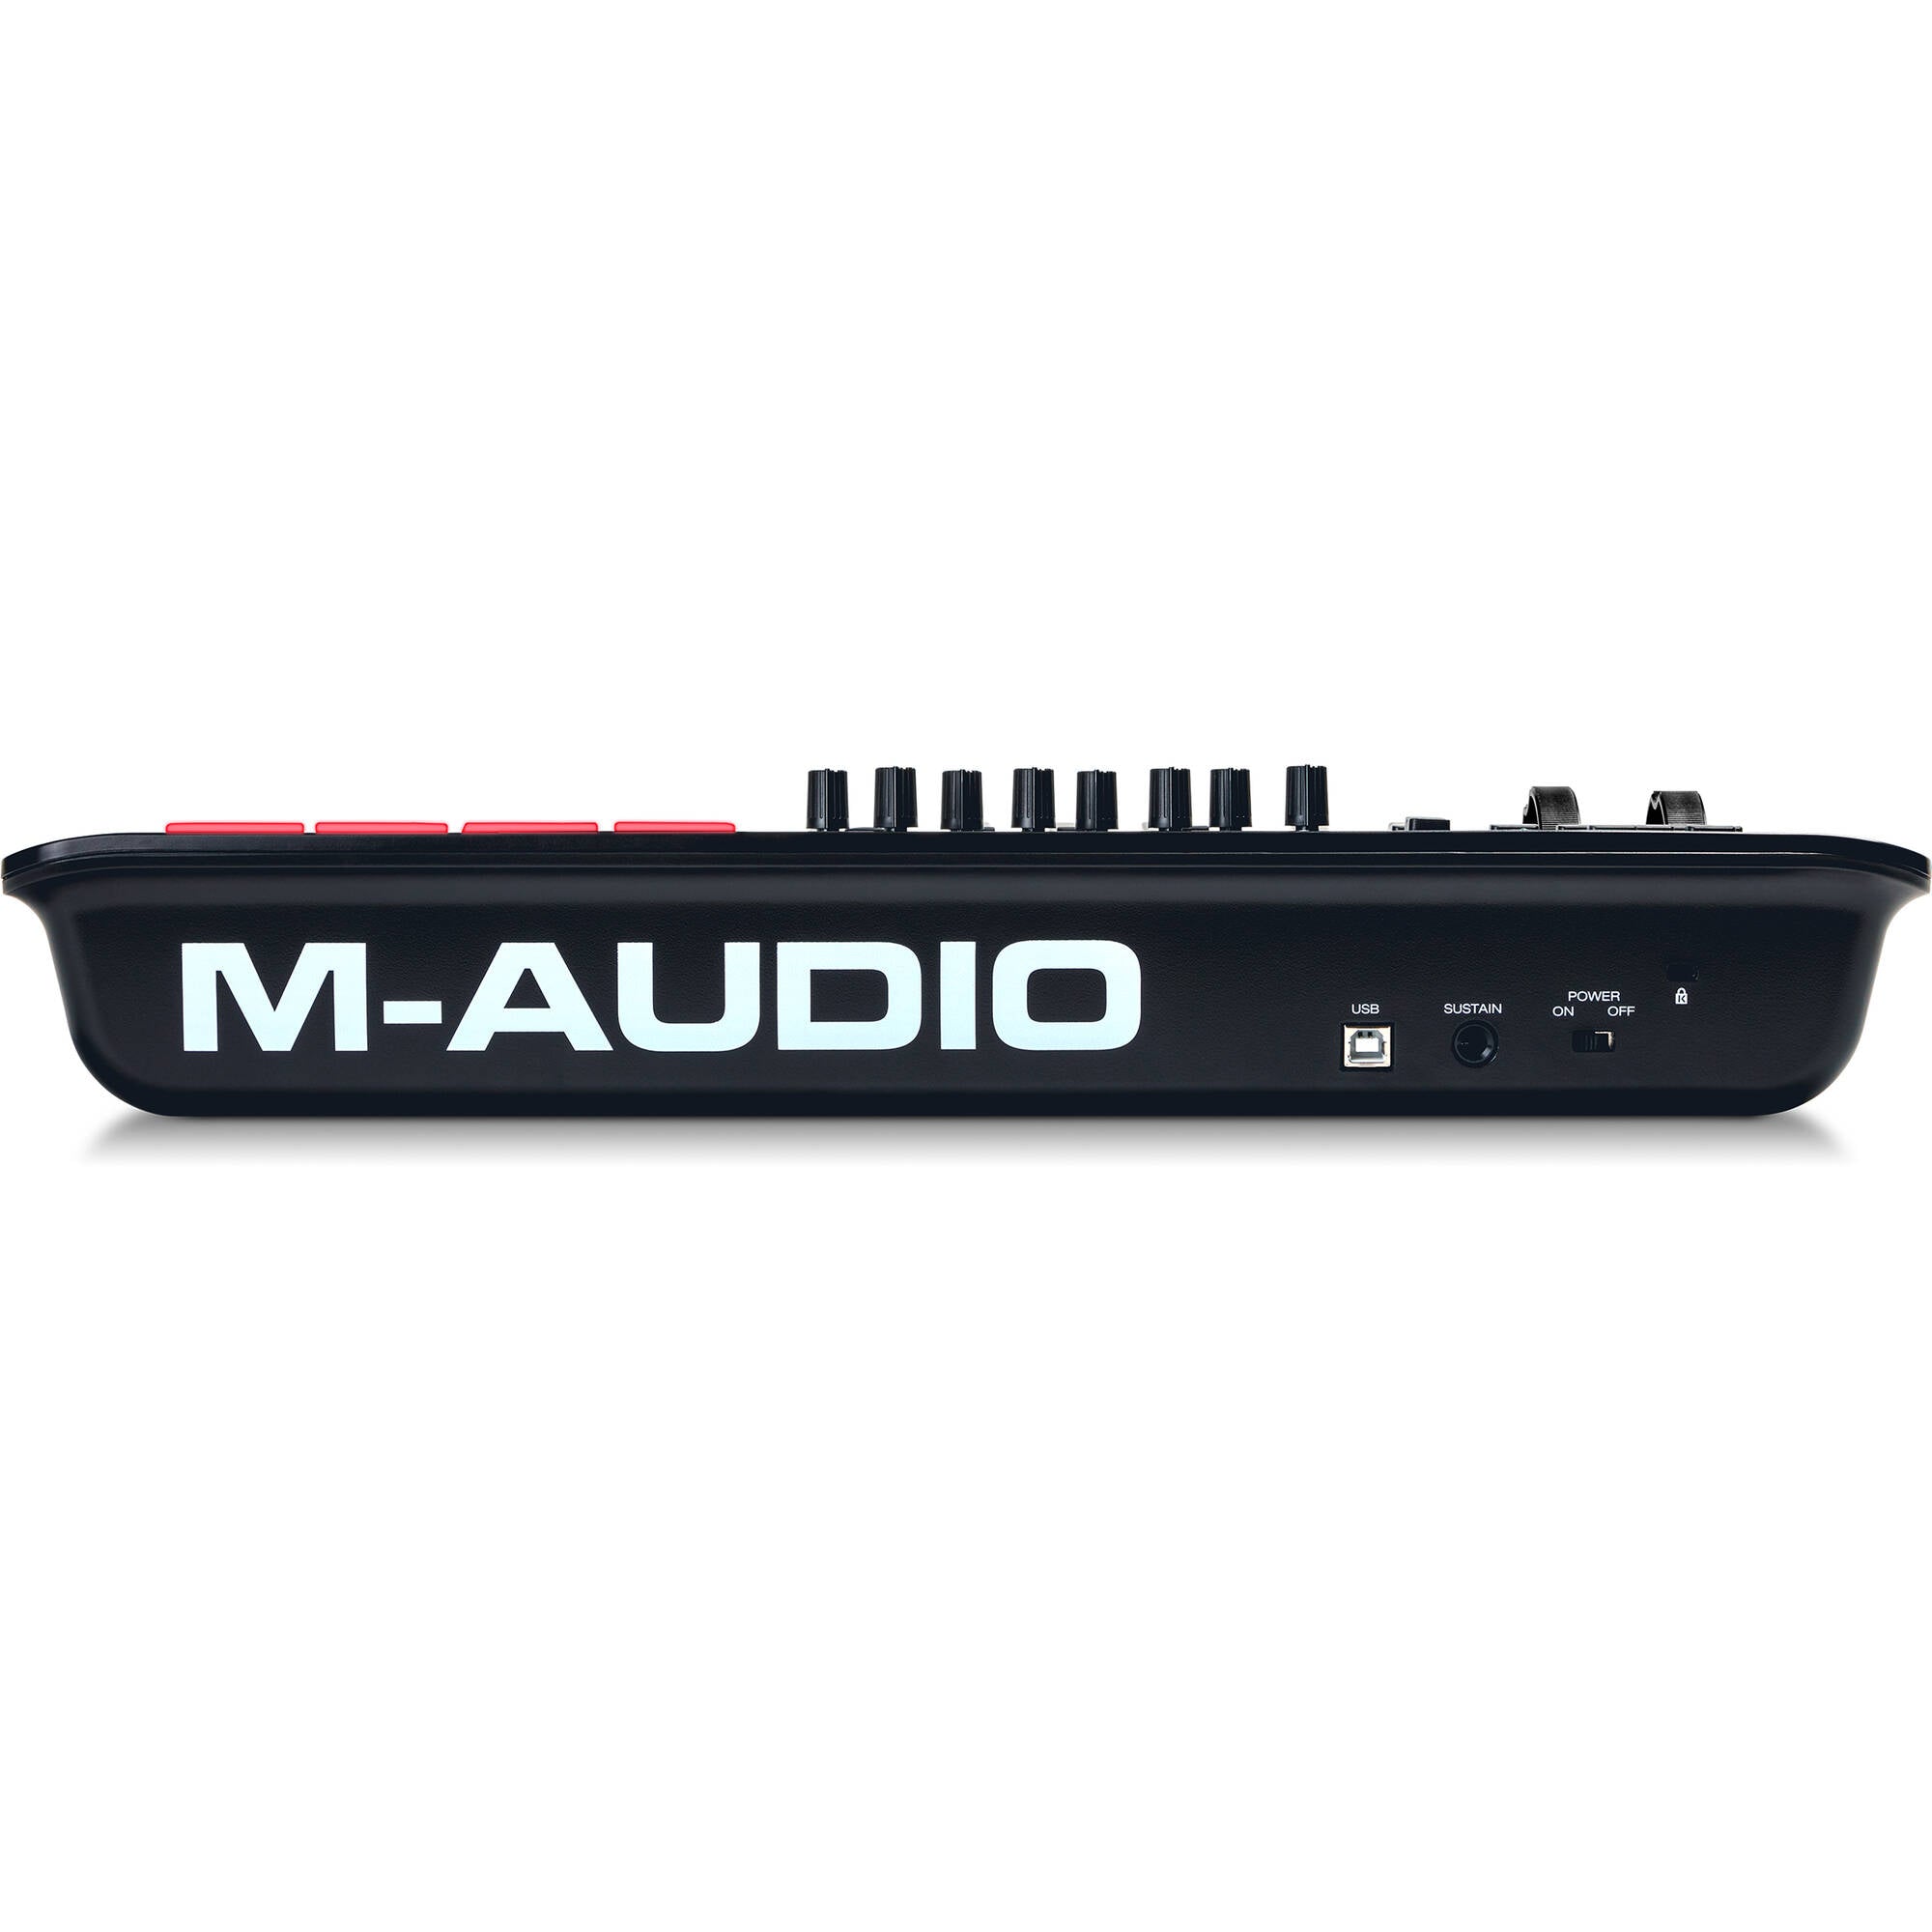 M-Audio Oxygen 25 MKV 25-key Keyboard Controller